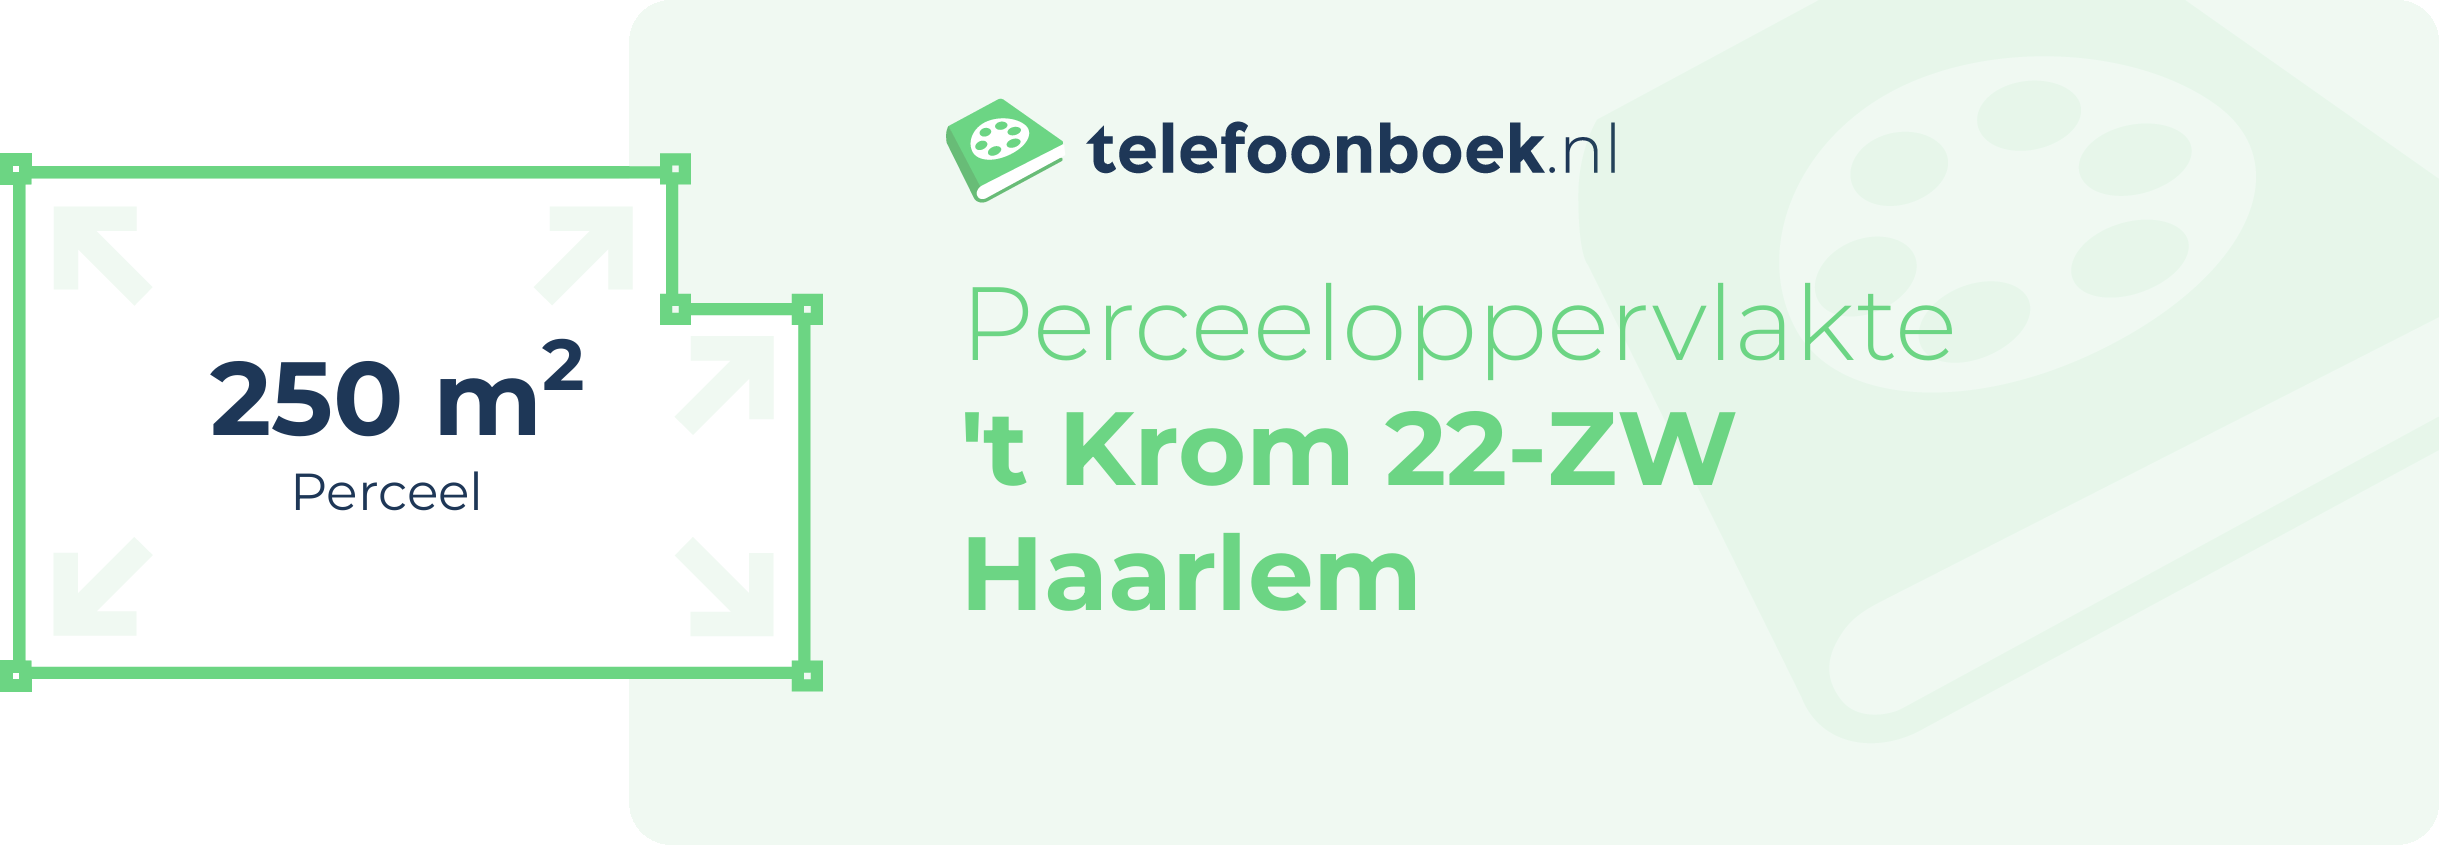 Perceeloppervlakte 't Krom 22-ZW Haarlem